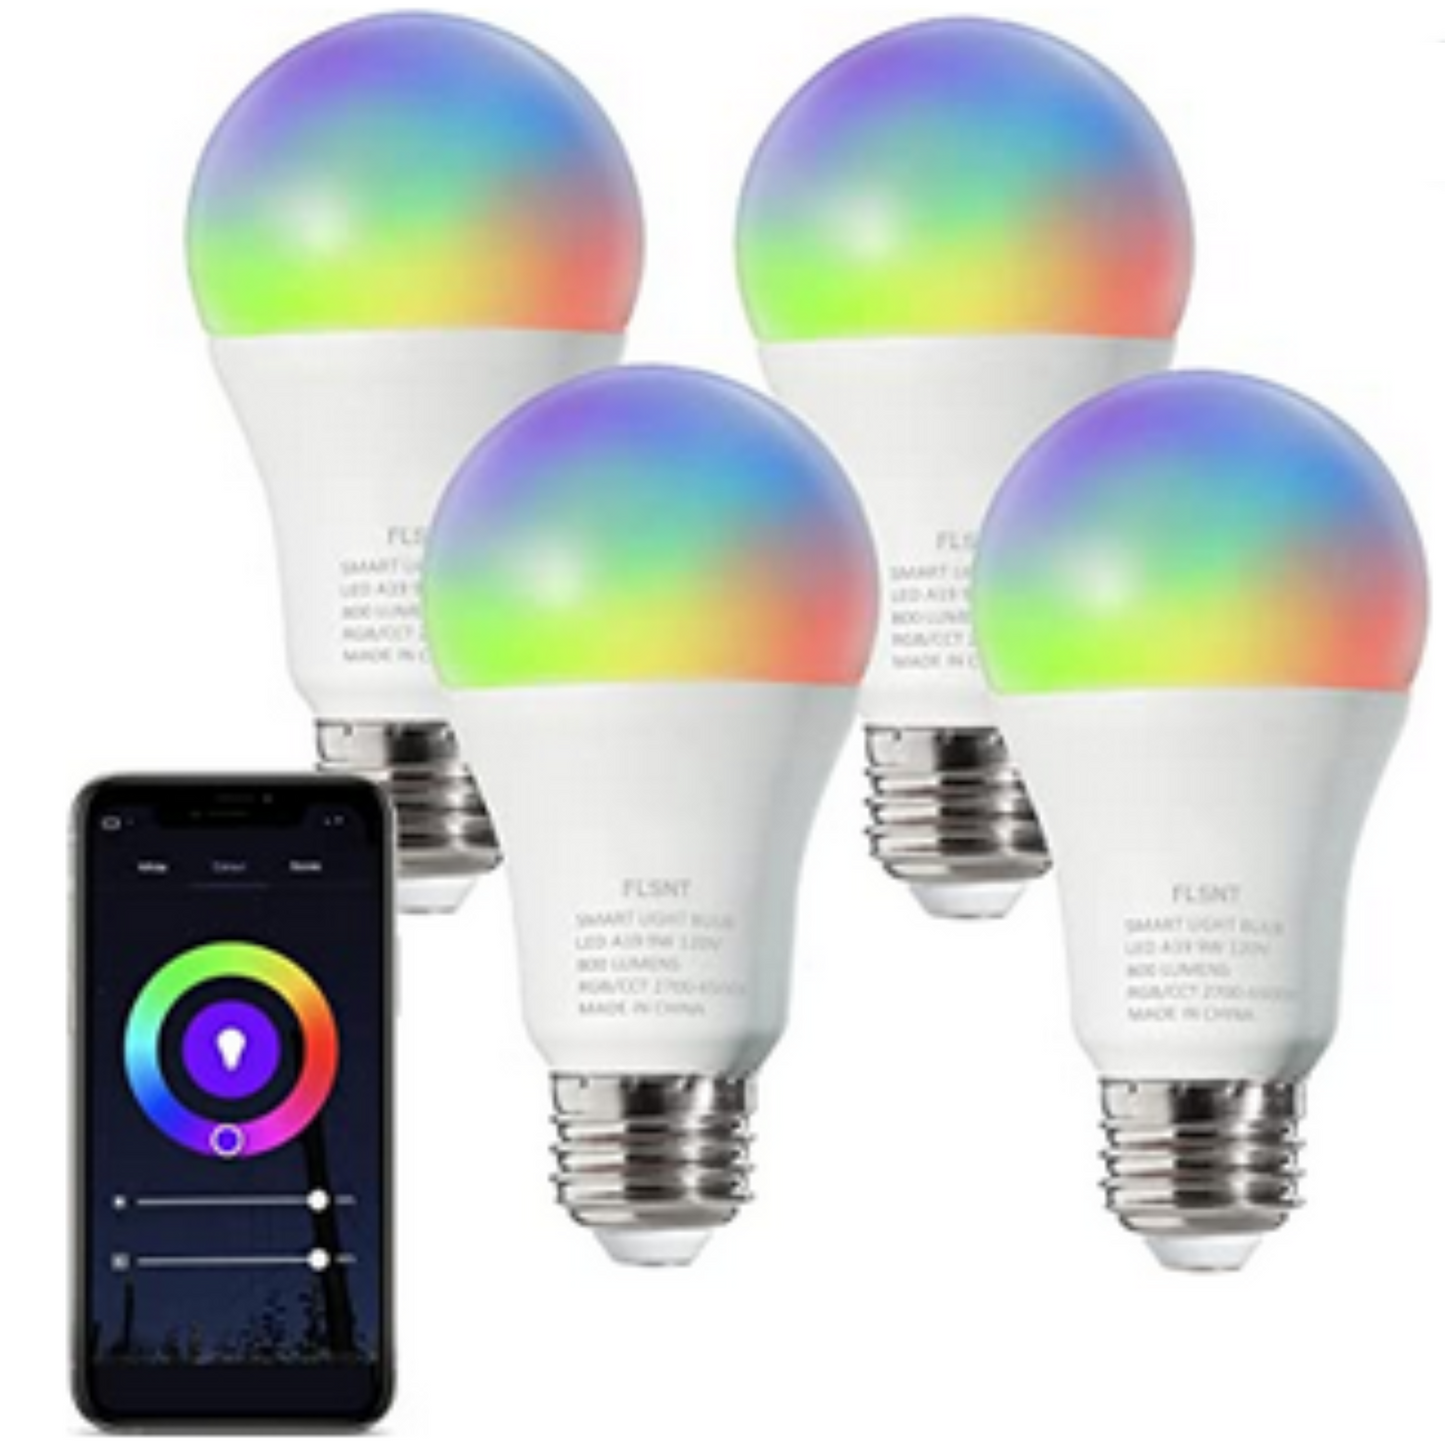 Colorful LED A Smart Bulb, 4 Pack